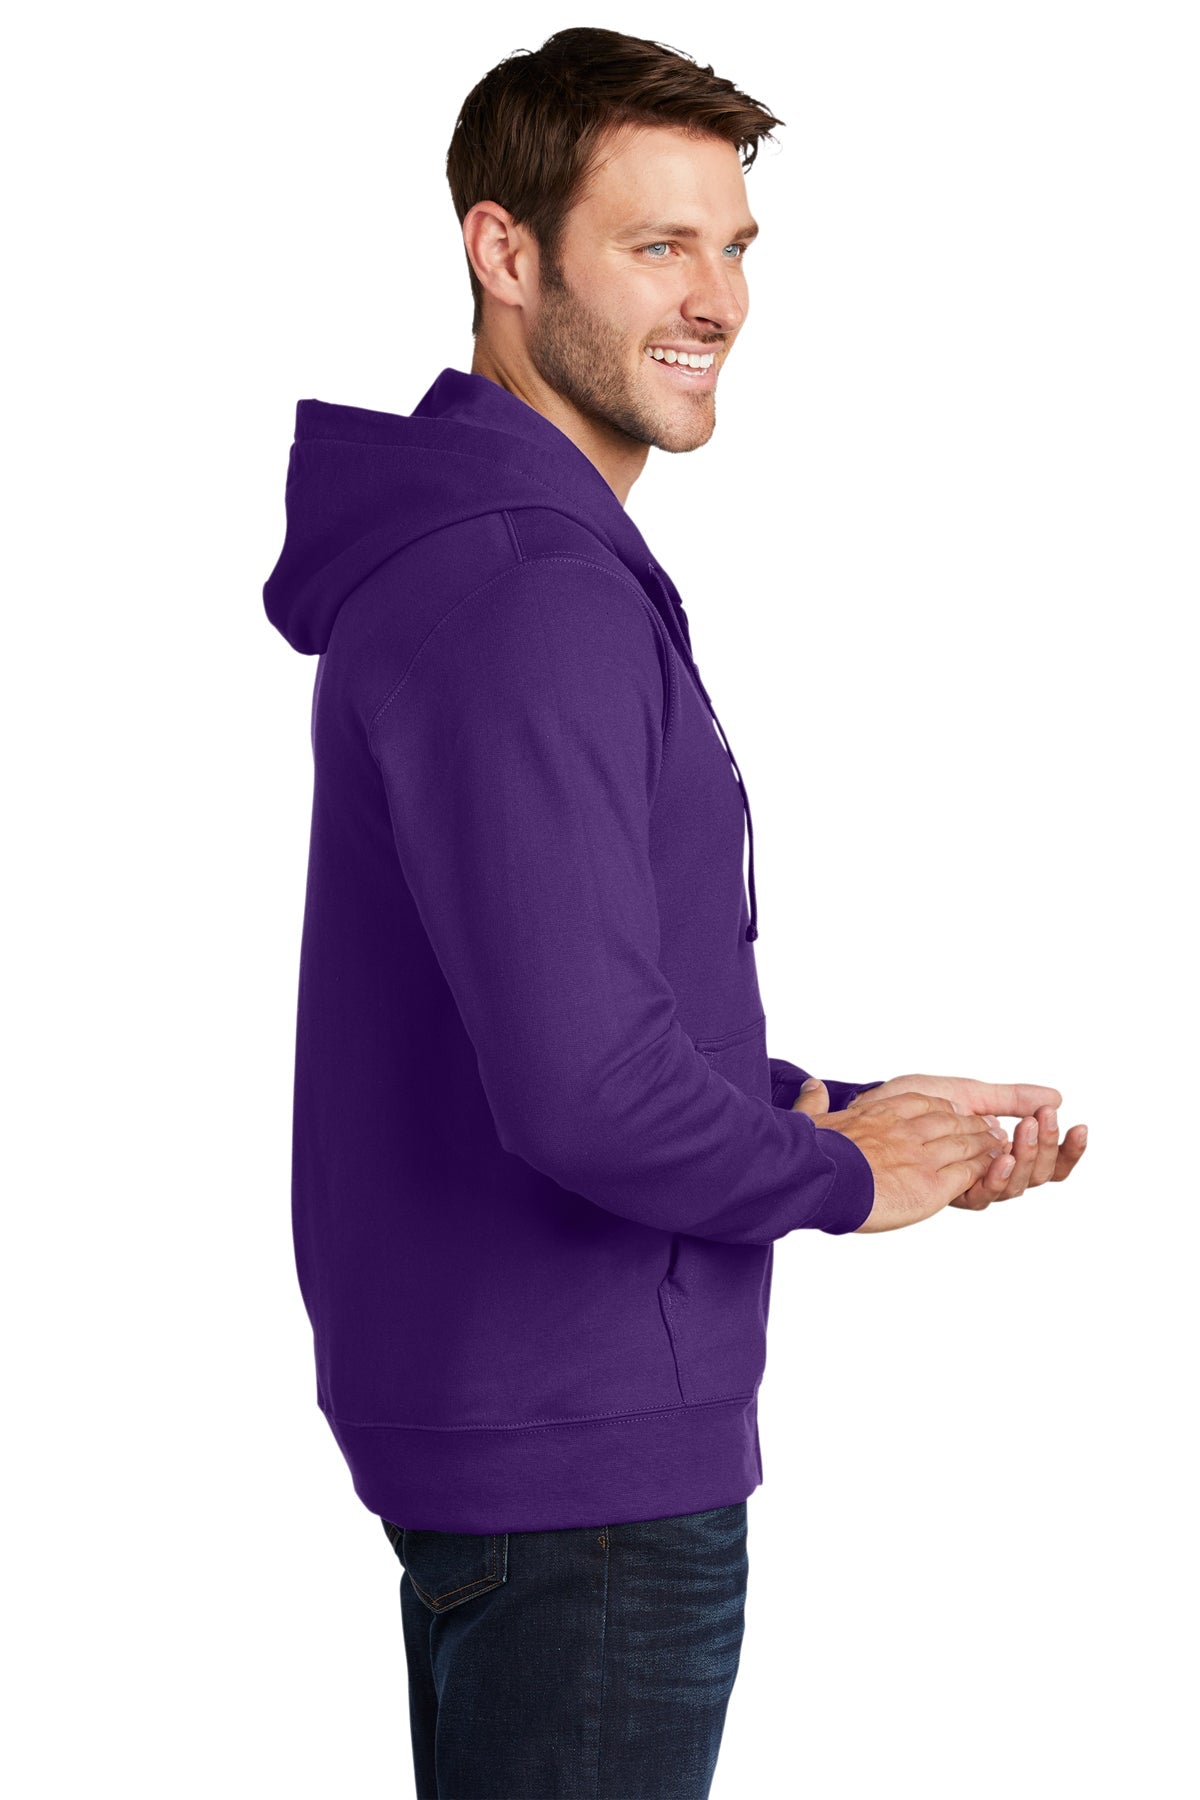 port & company_pc850zh _team purple_company_logo_sweatshirts